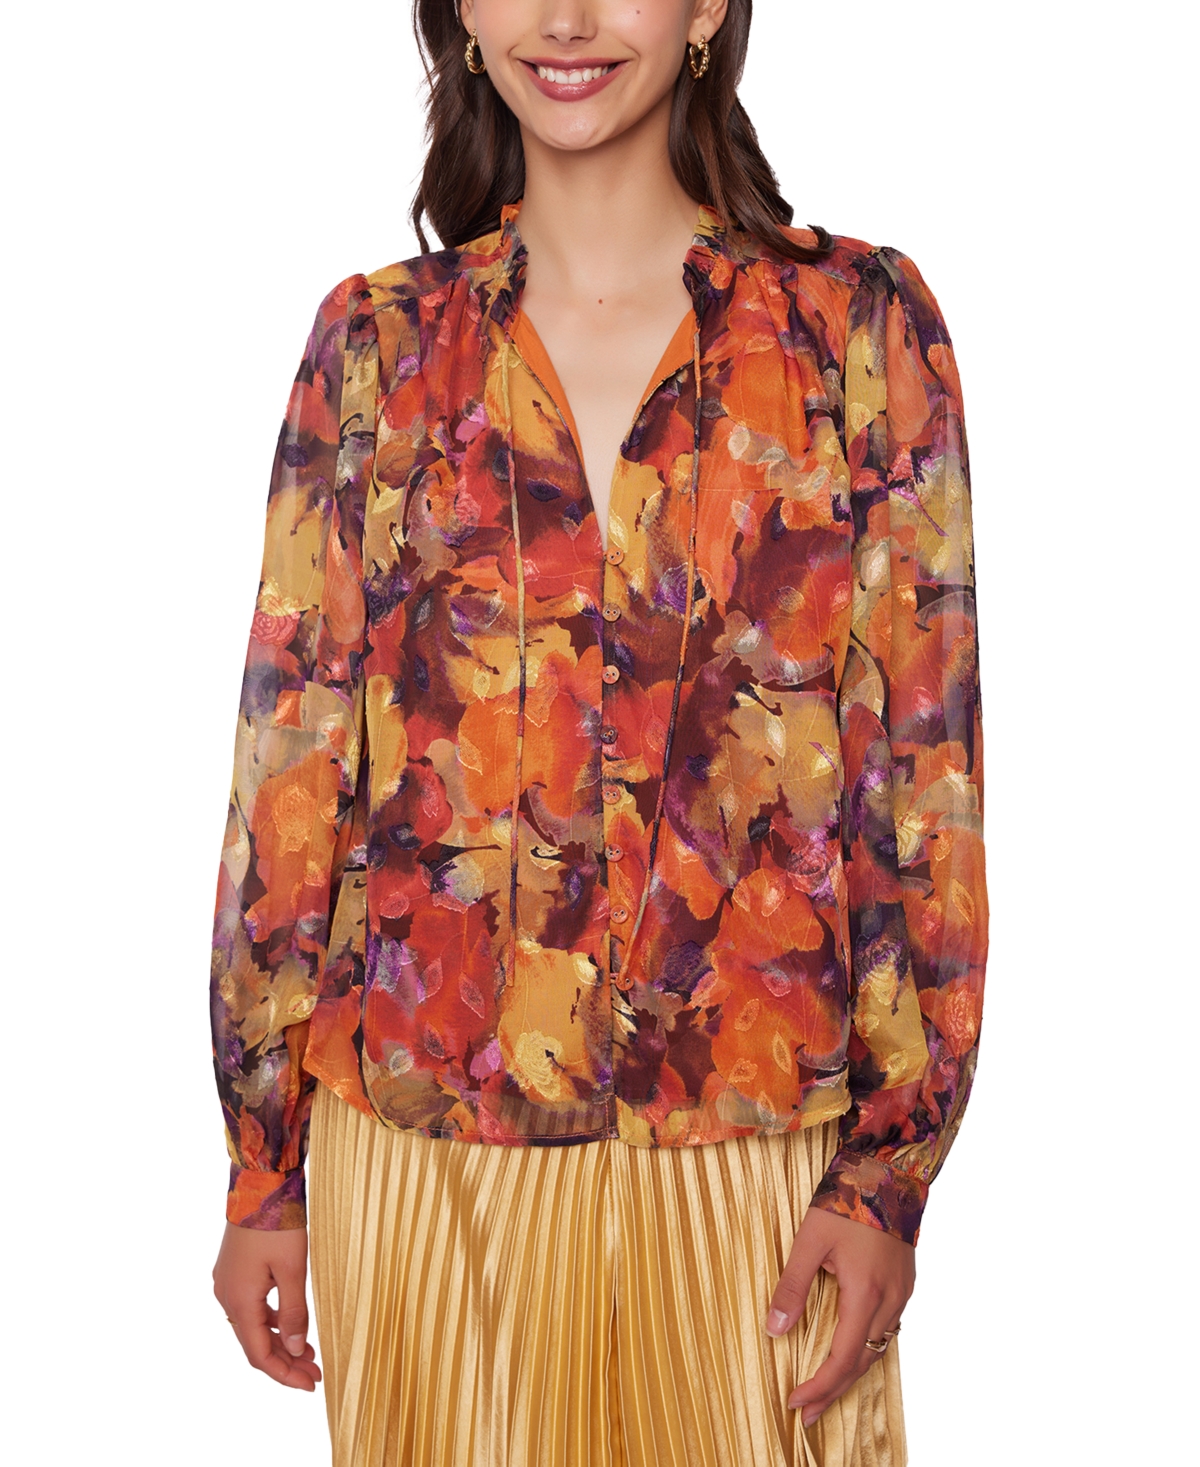 Women's Surreal Floral-Print Blouse - Orange Multi